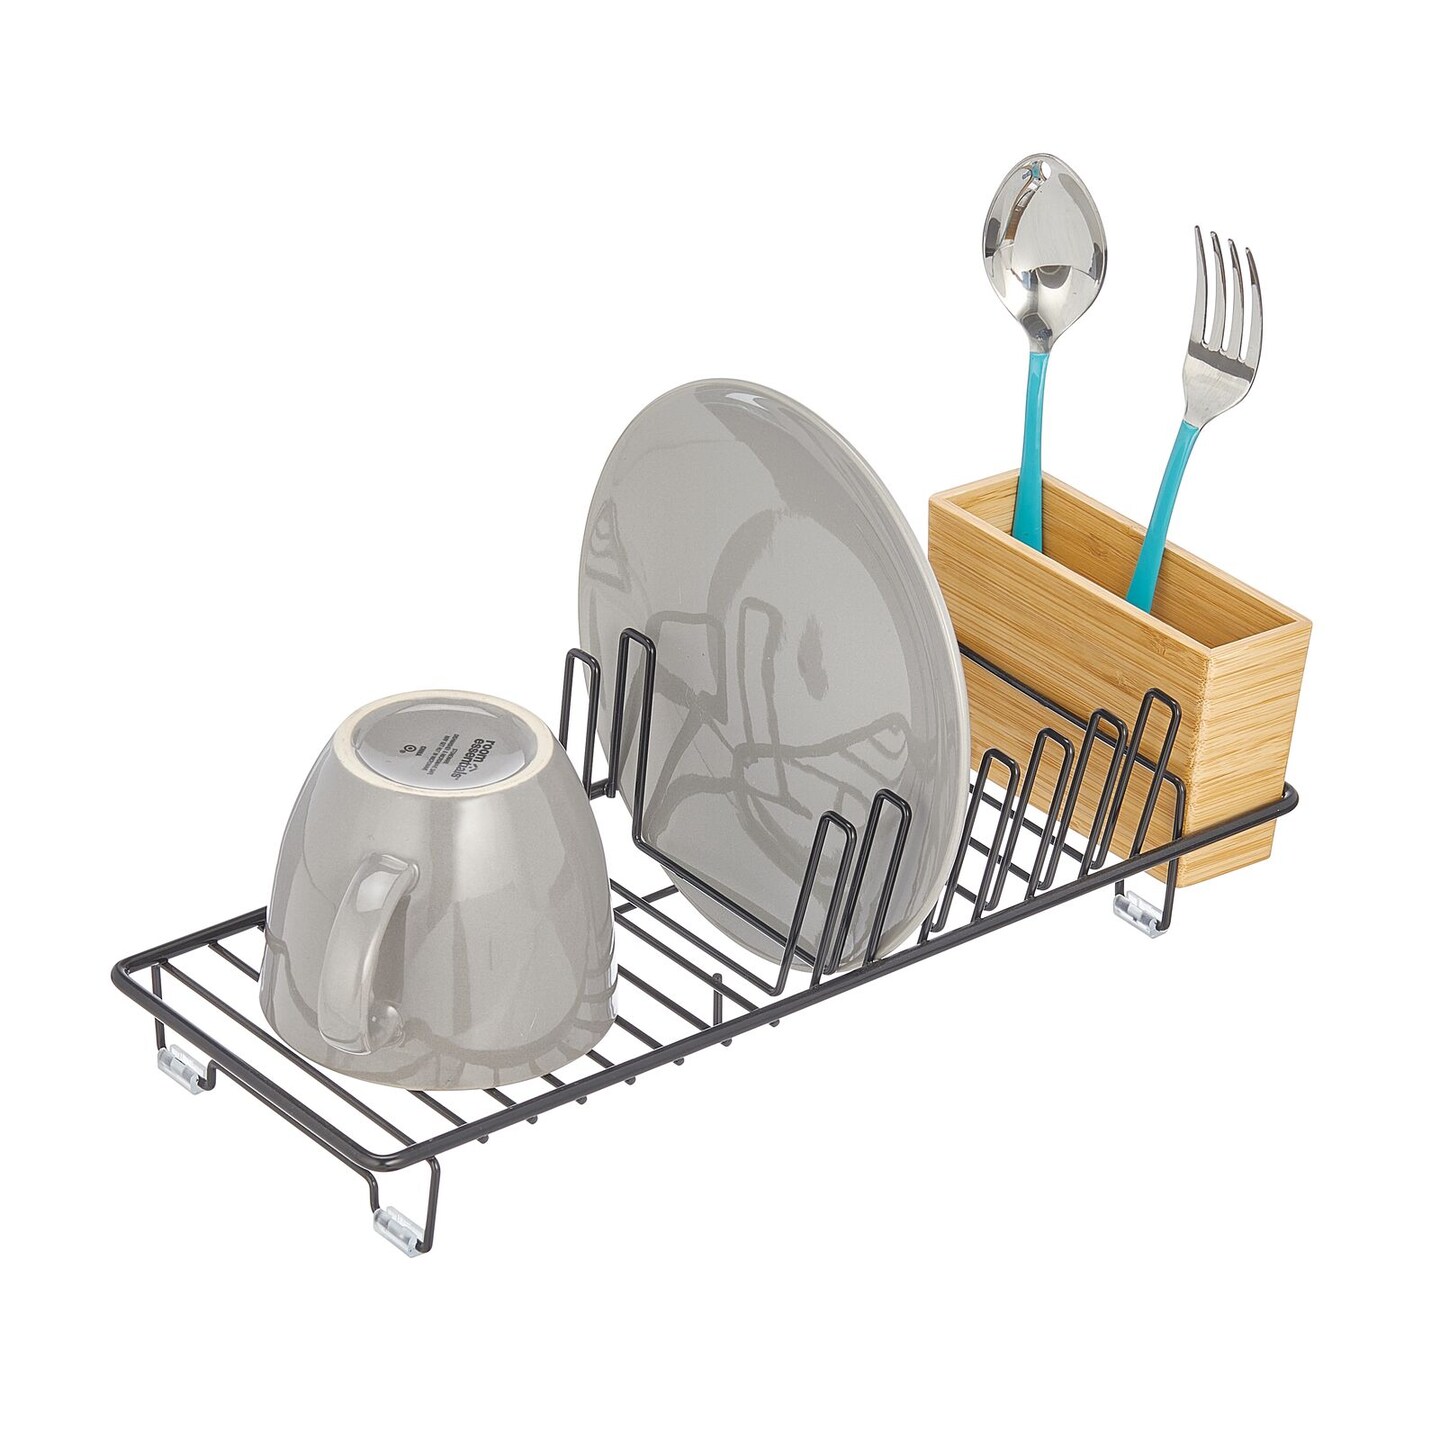  Small Dish Drying Rack - Compact Dish Rack for